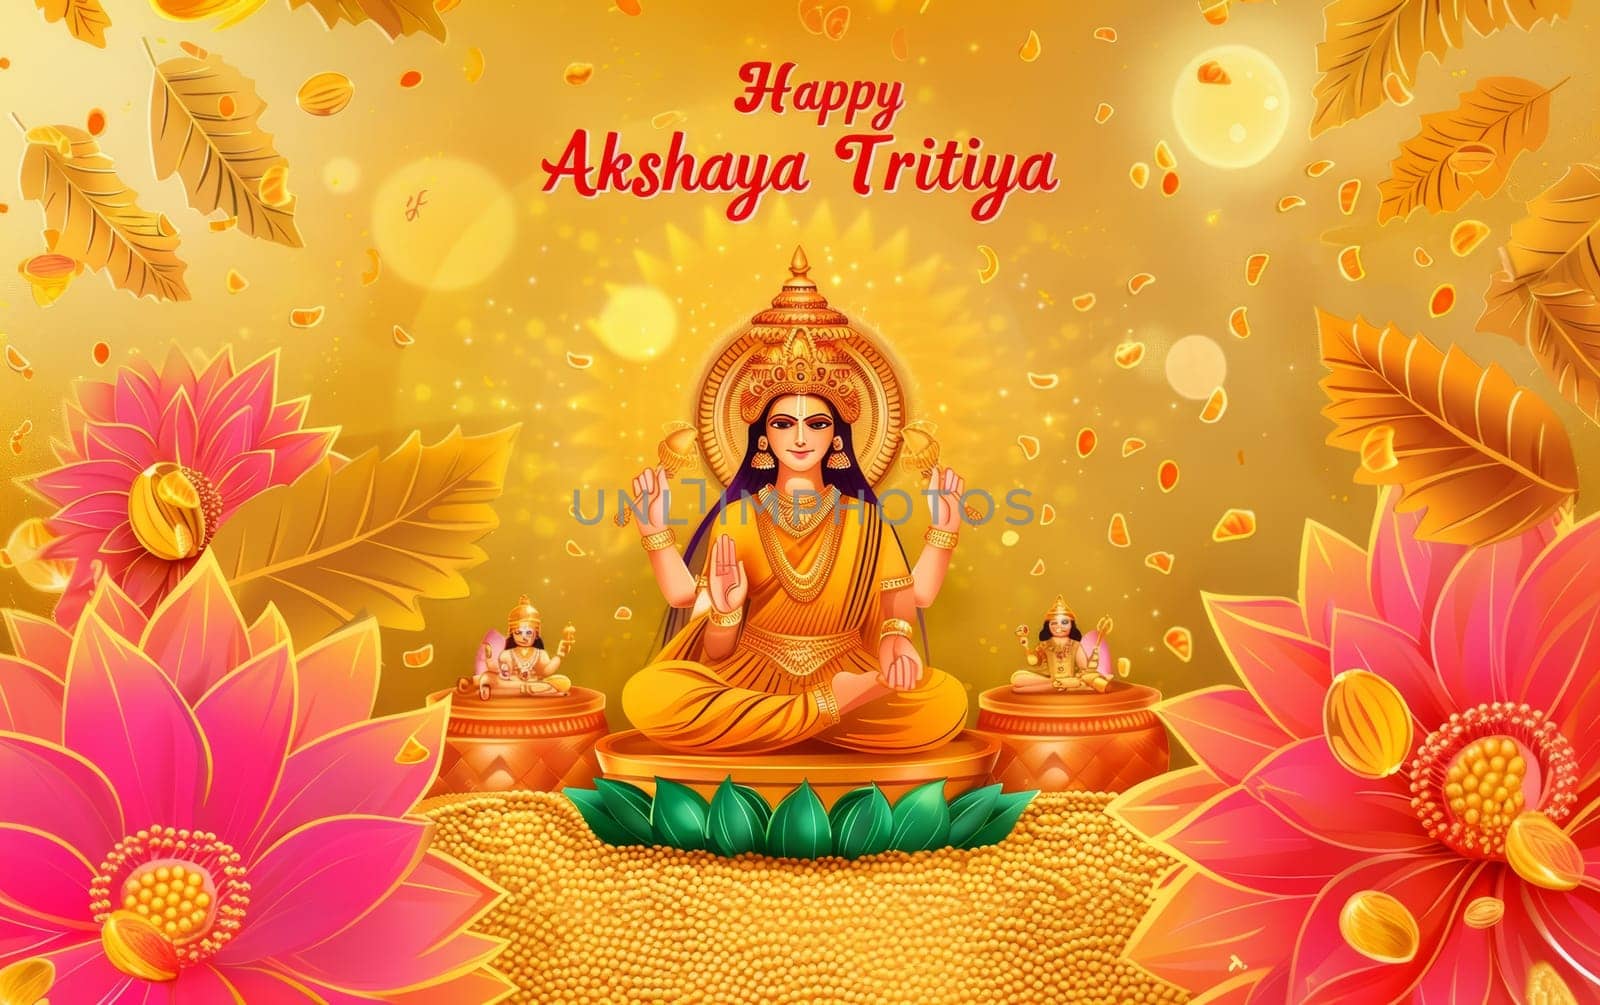 A warm Akshaya Tritiya greeting depicting Goddess Lakshmi with rice bowls and attendant deities on a glowing golden background